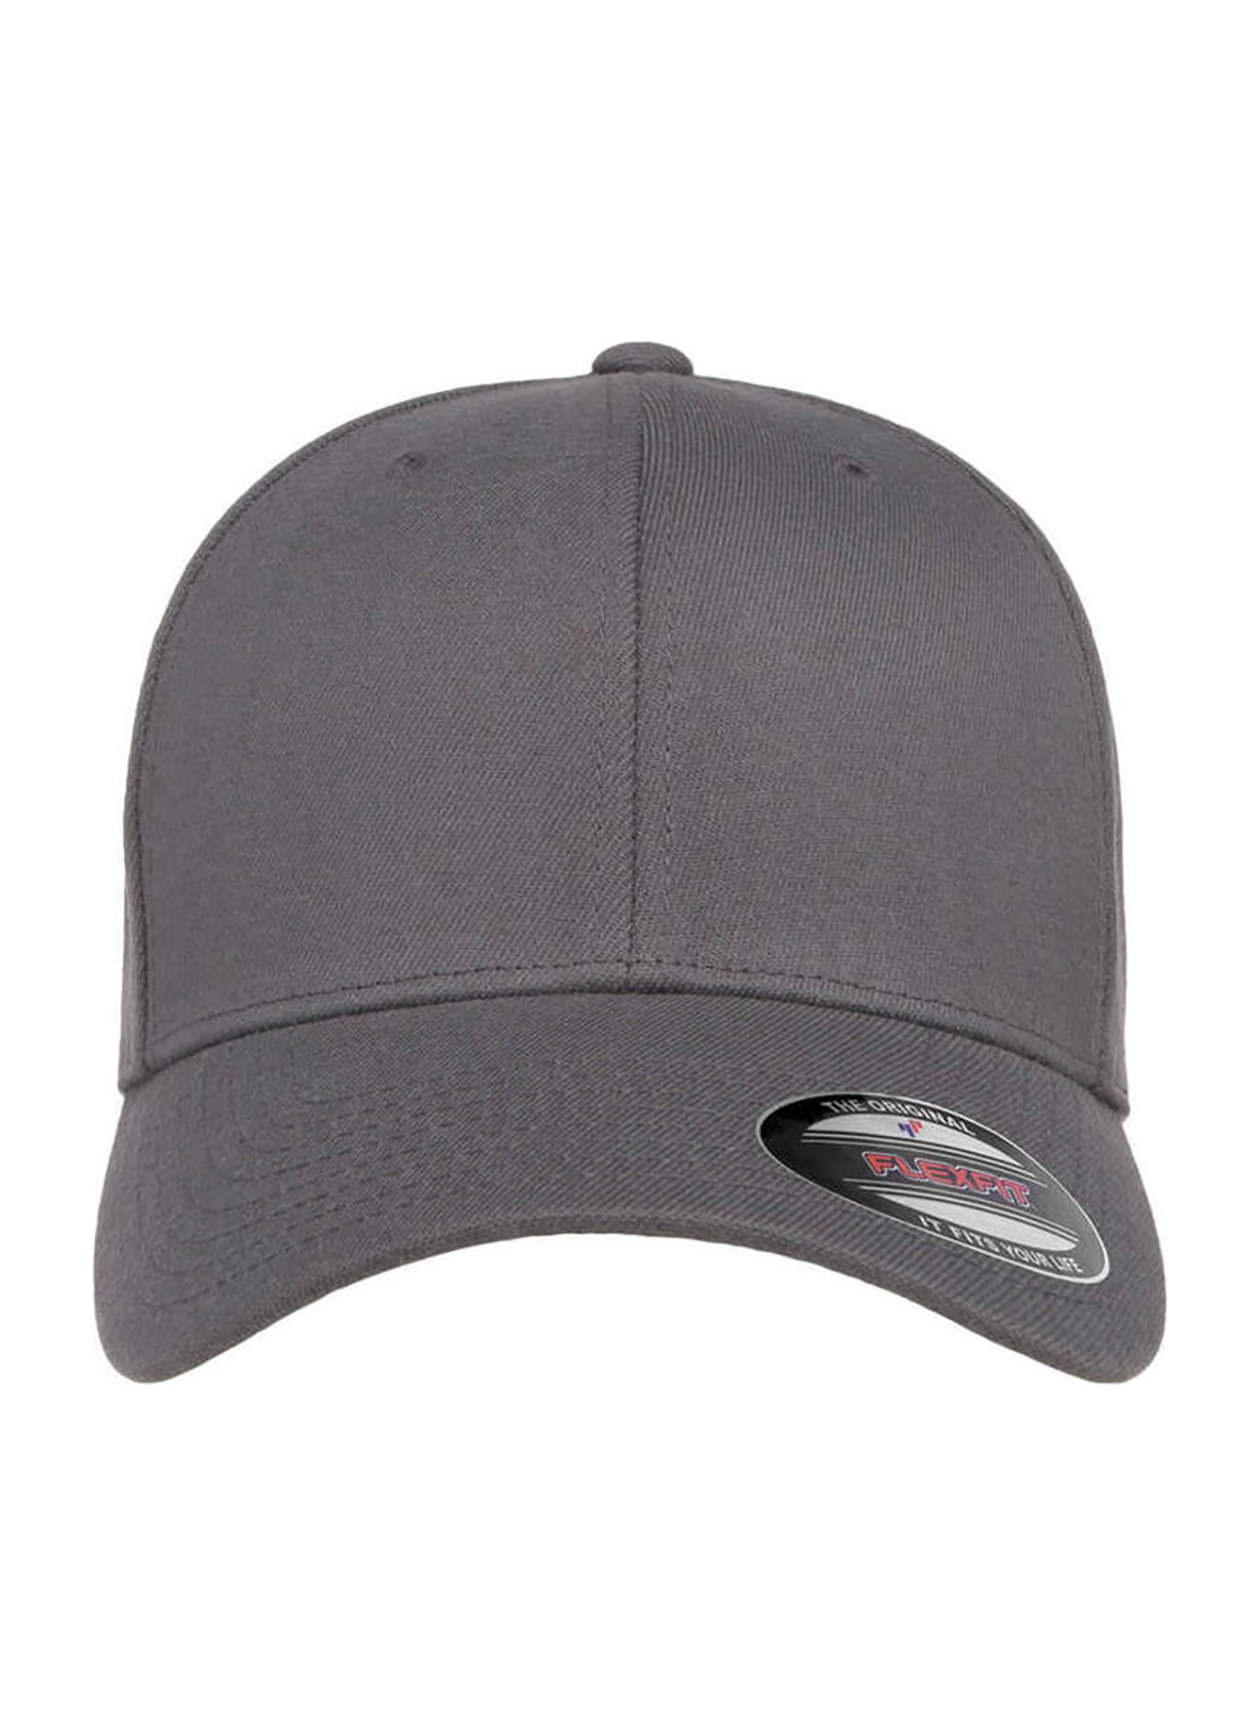 Grey Flexfit Wool Blend Hat | Flexfit